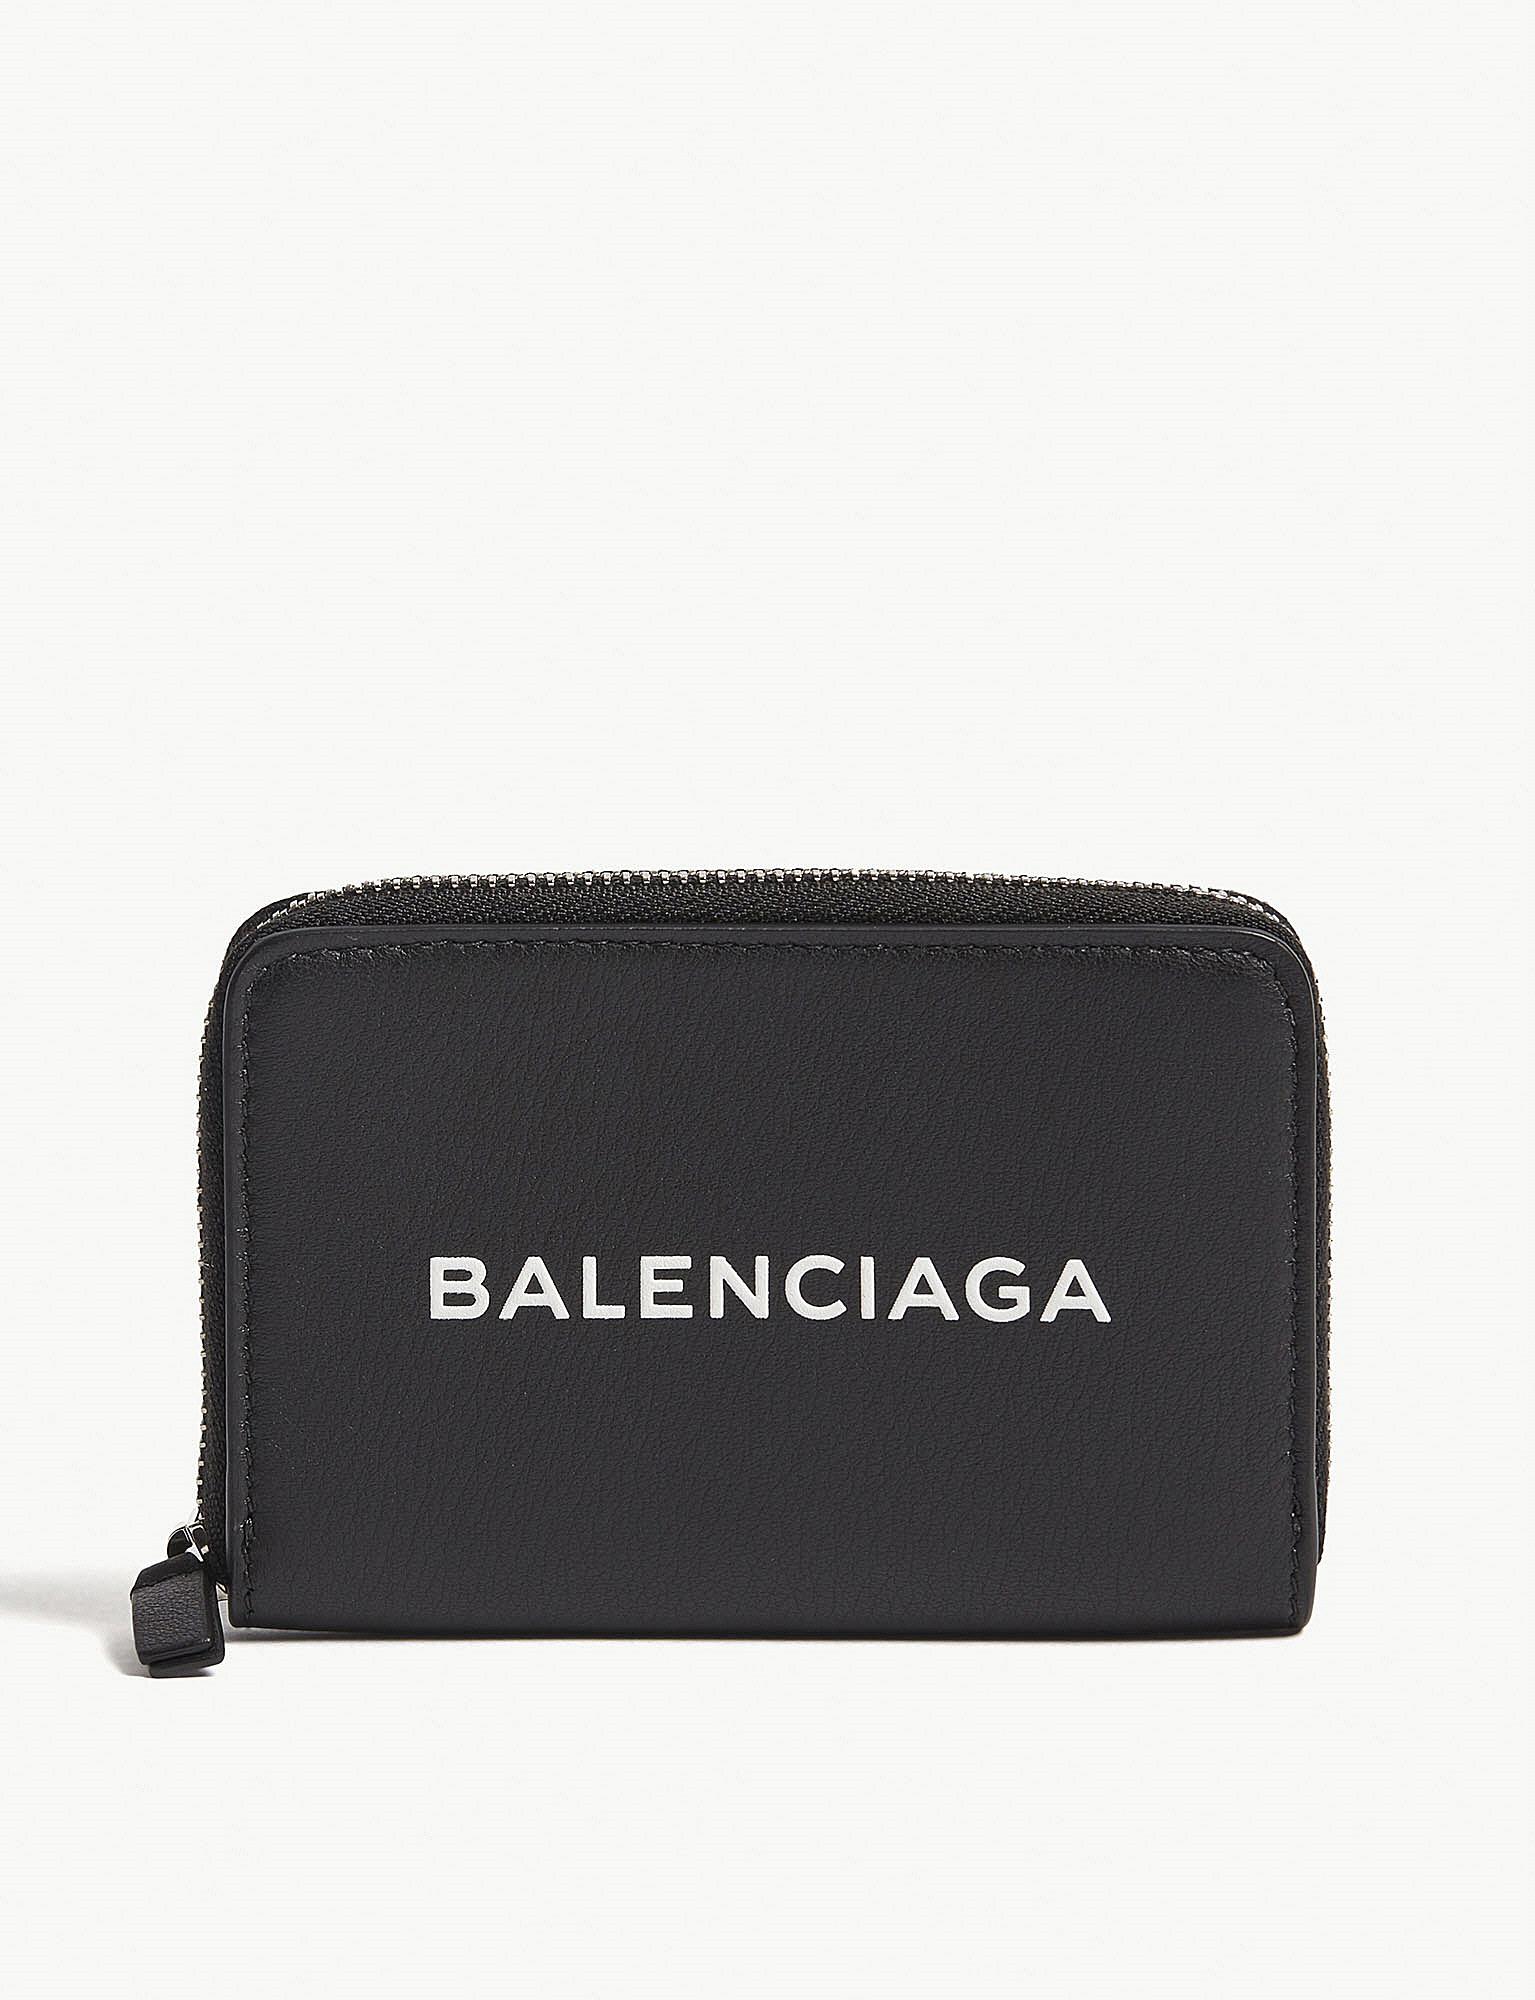 Lyst - Balenciaga Baltimore Leather Zip-around Wallet in Black for Men